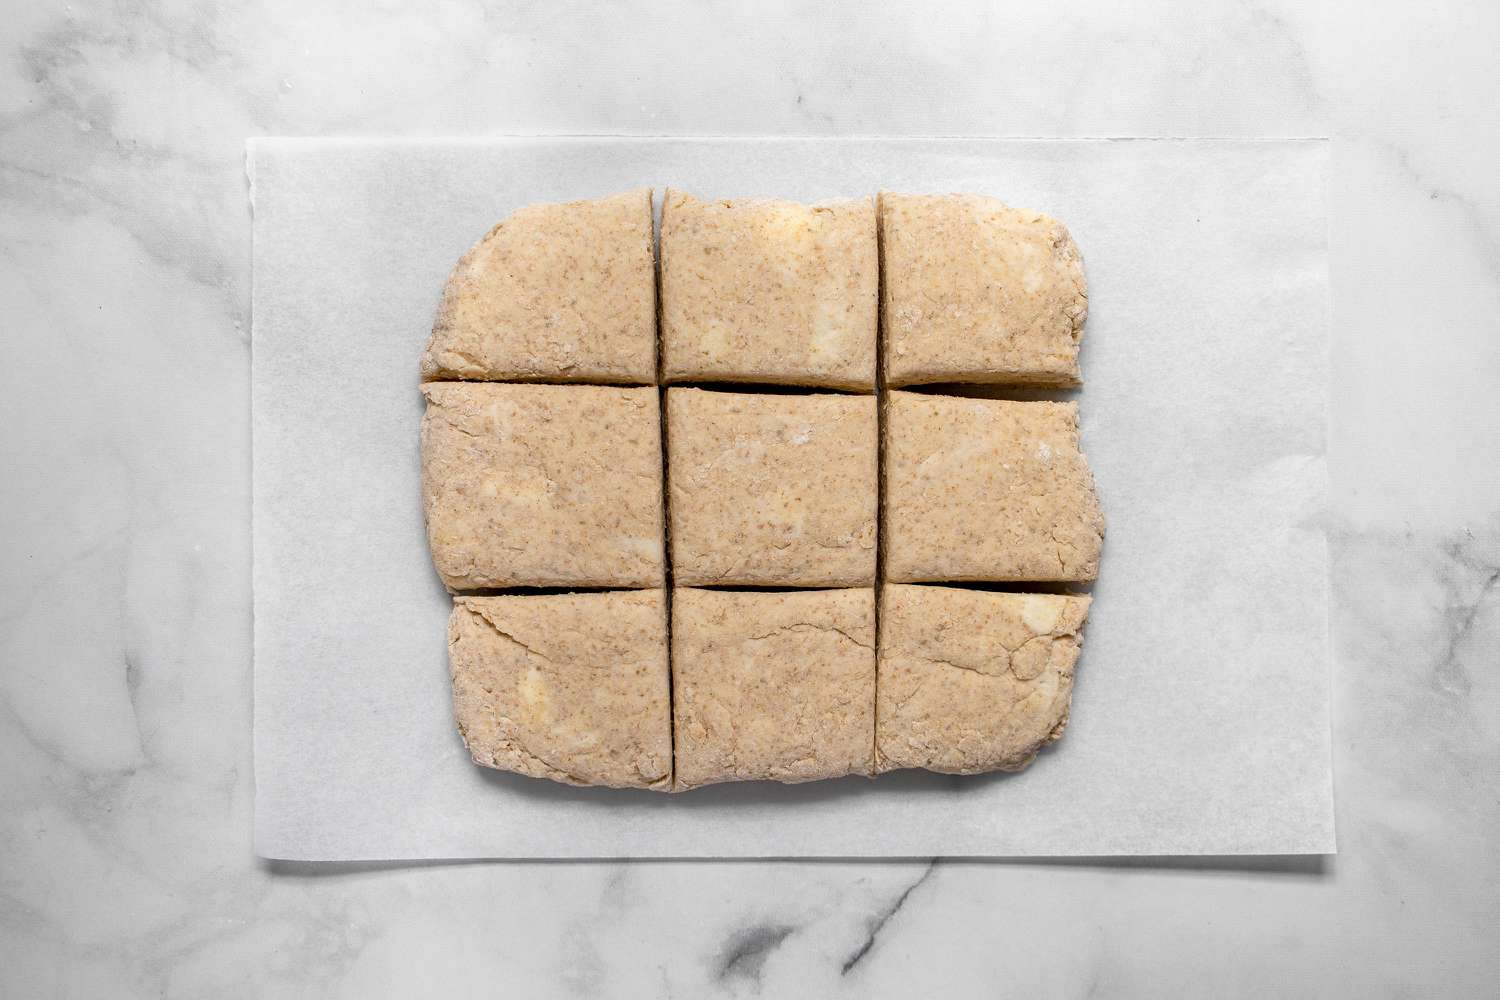 biscuit dough cut into pieces 